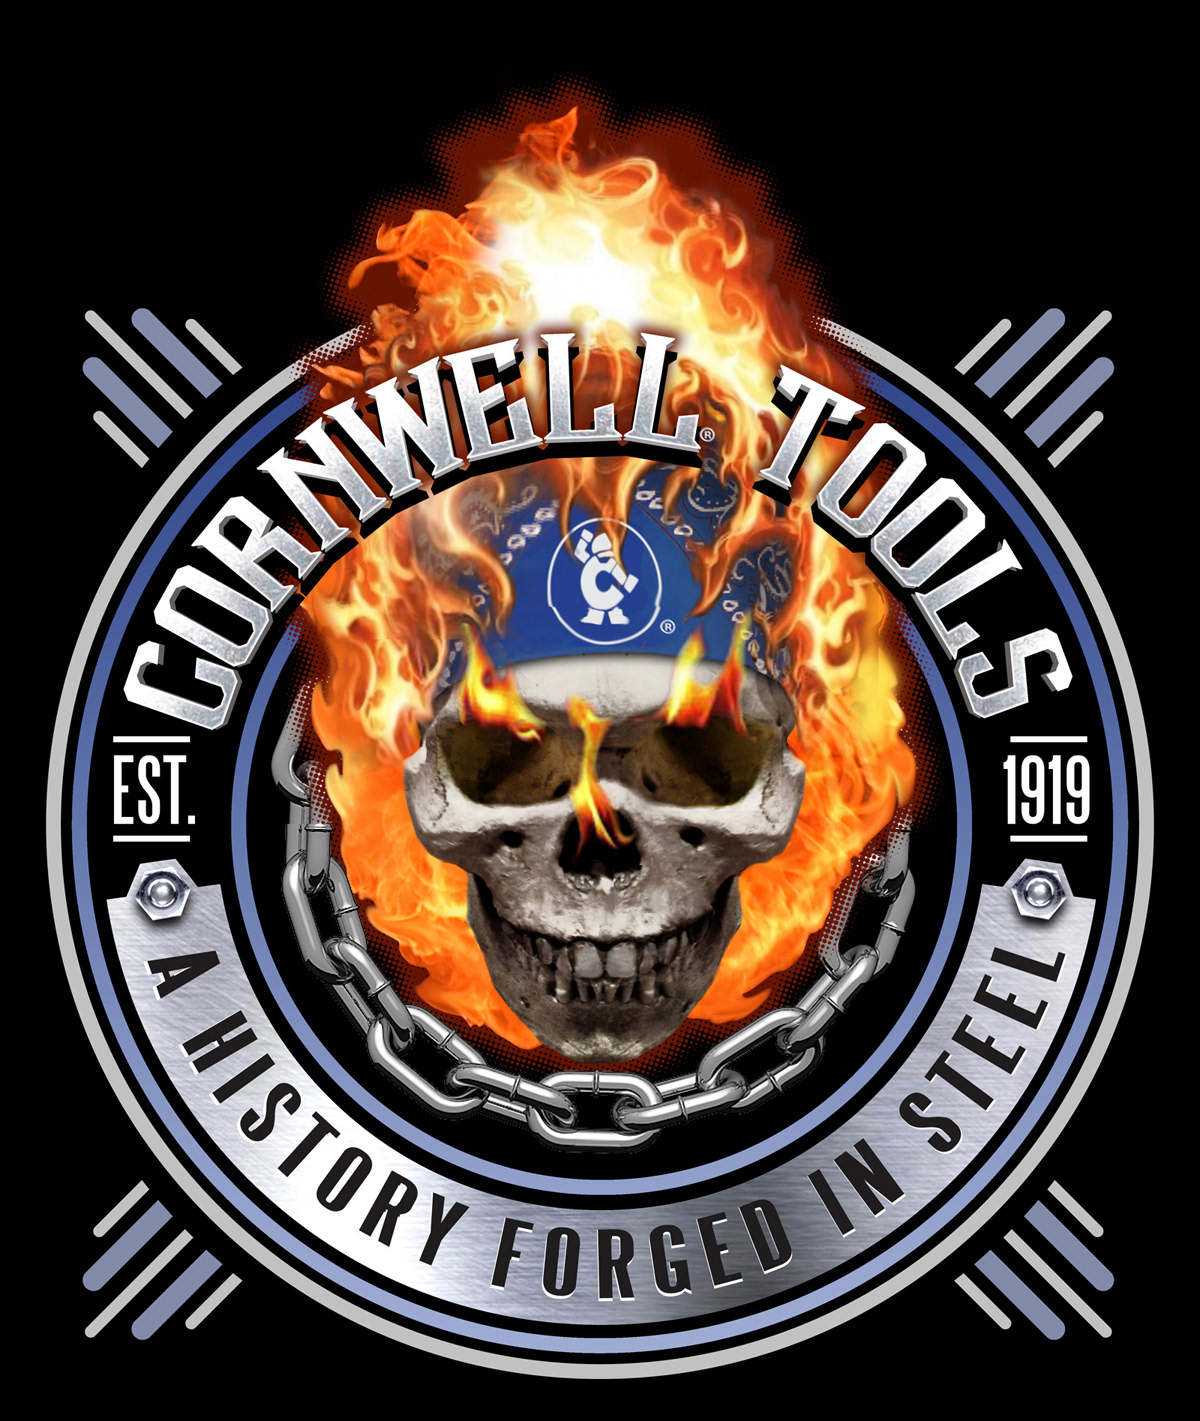 cornwell tools flaming skull skull retro crest logo forged in steel logan rogers